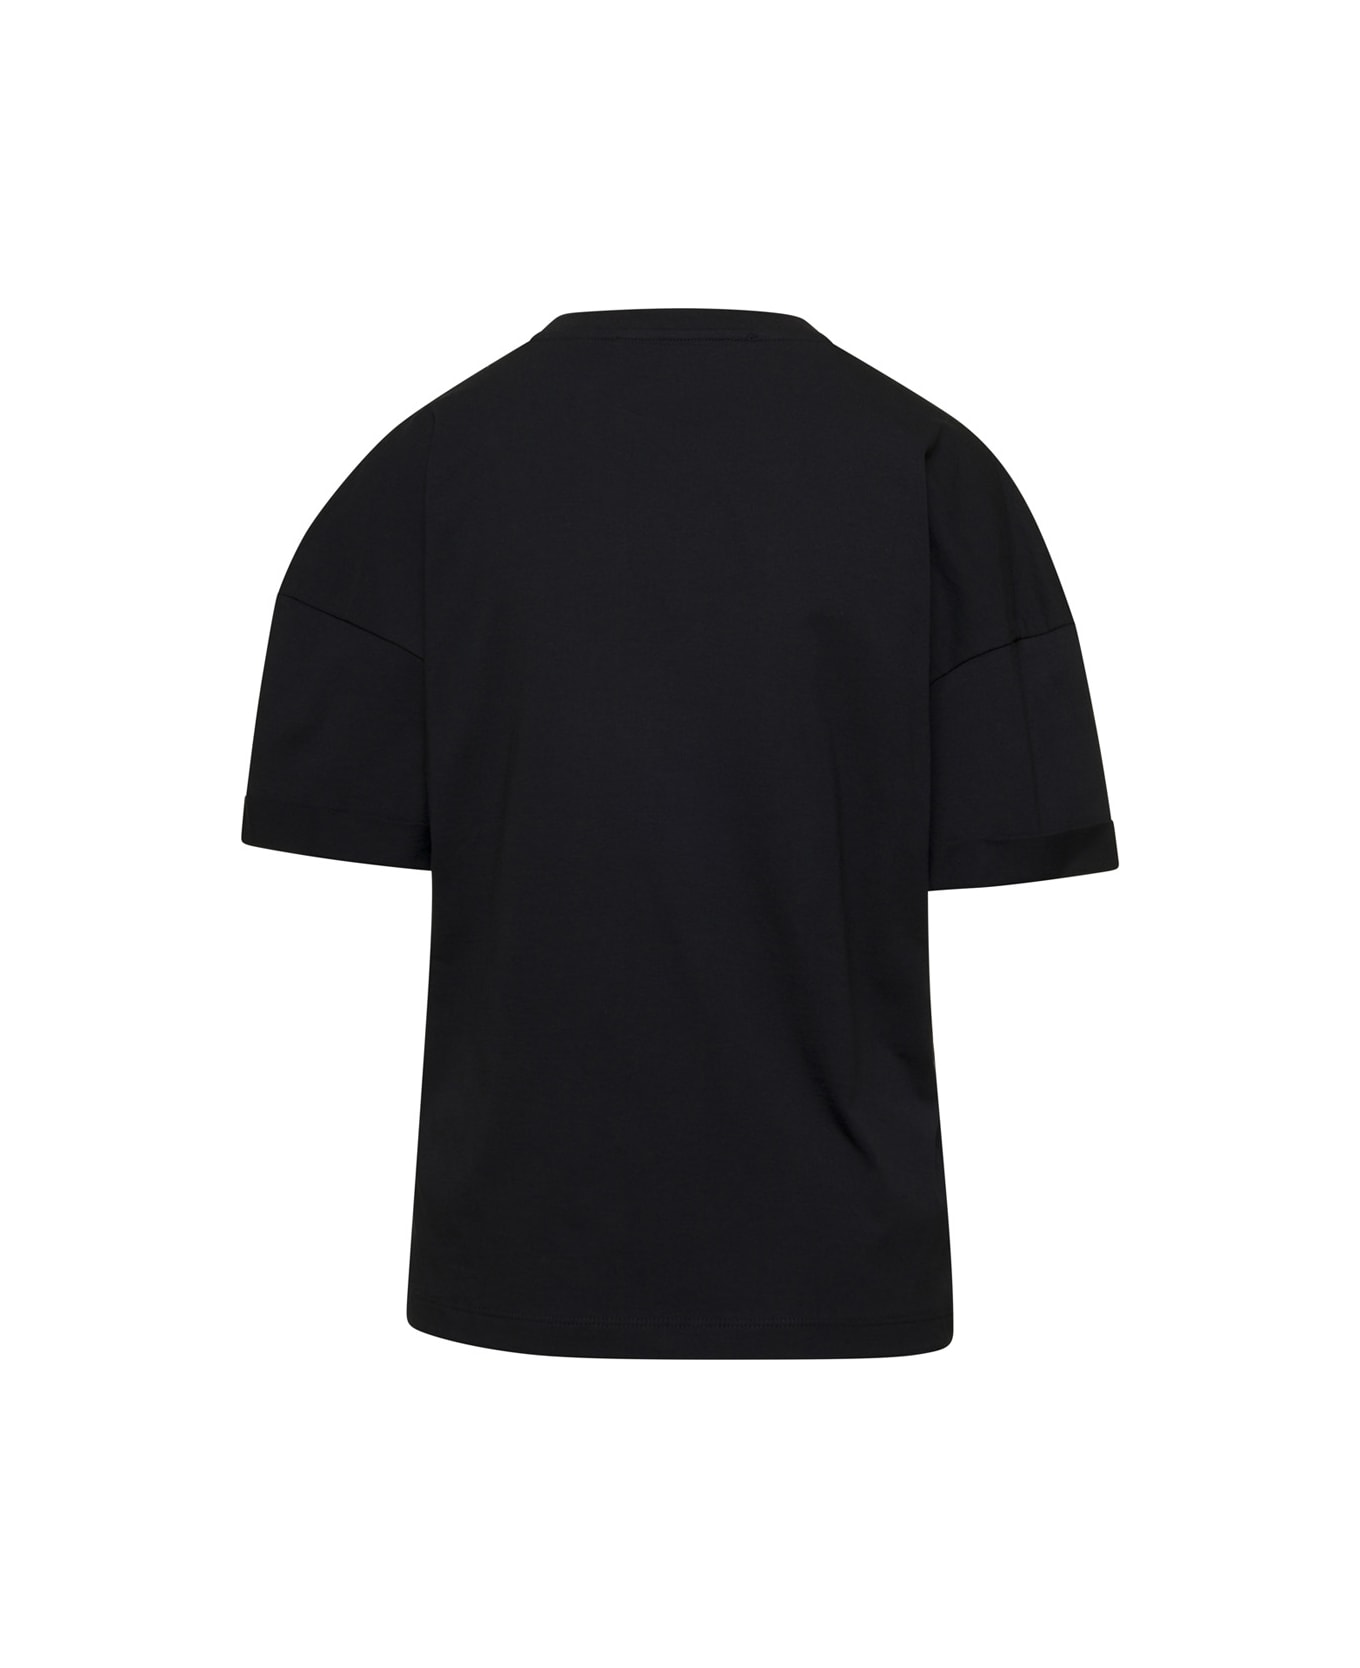 Federica Tosi Black Crewneck T-shirt In Cotton Woman - Black